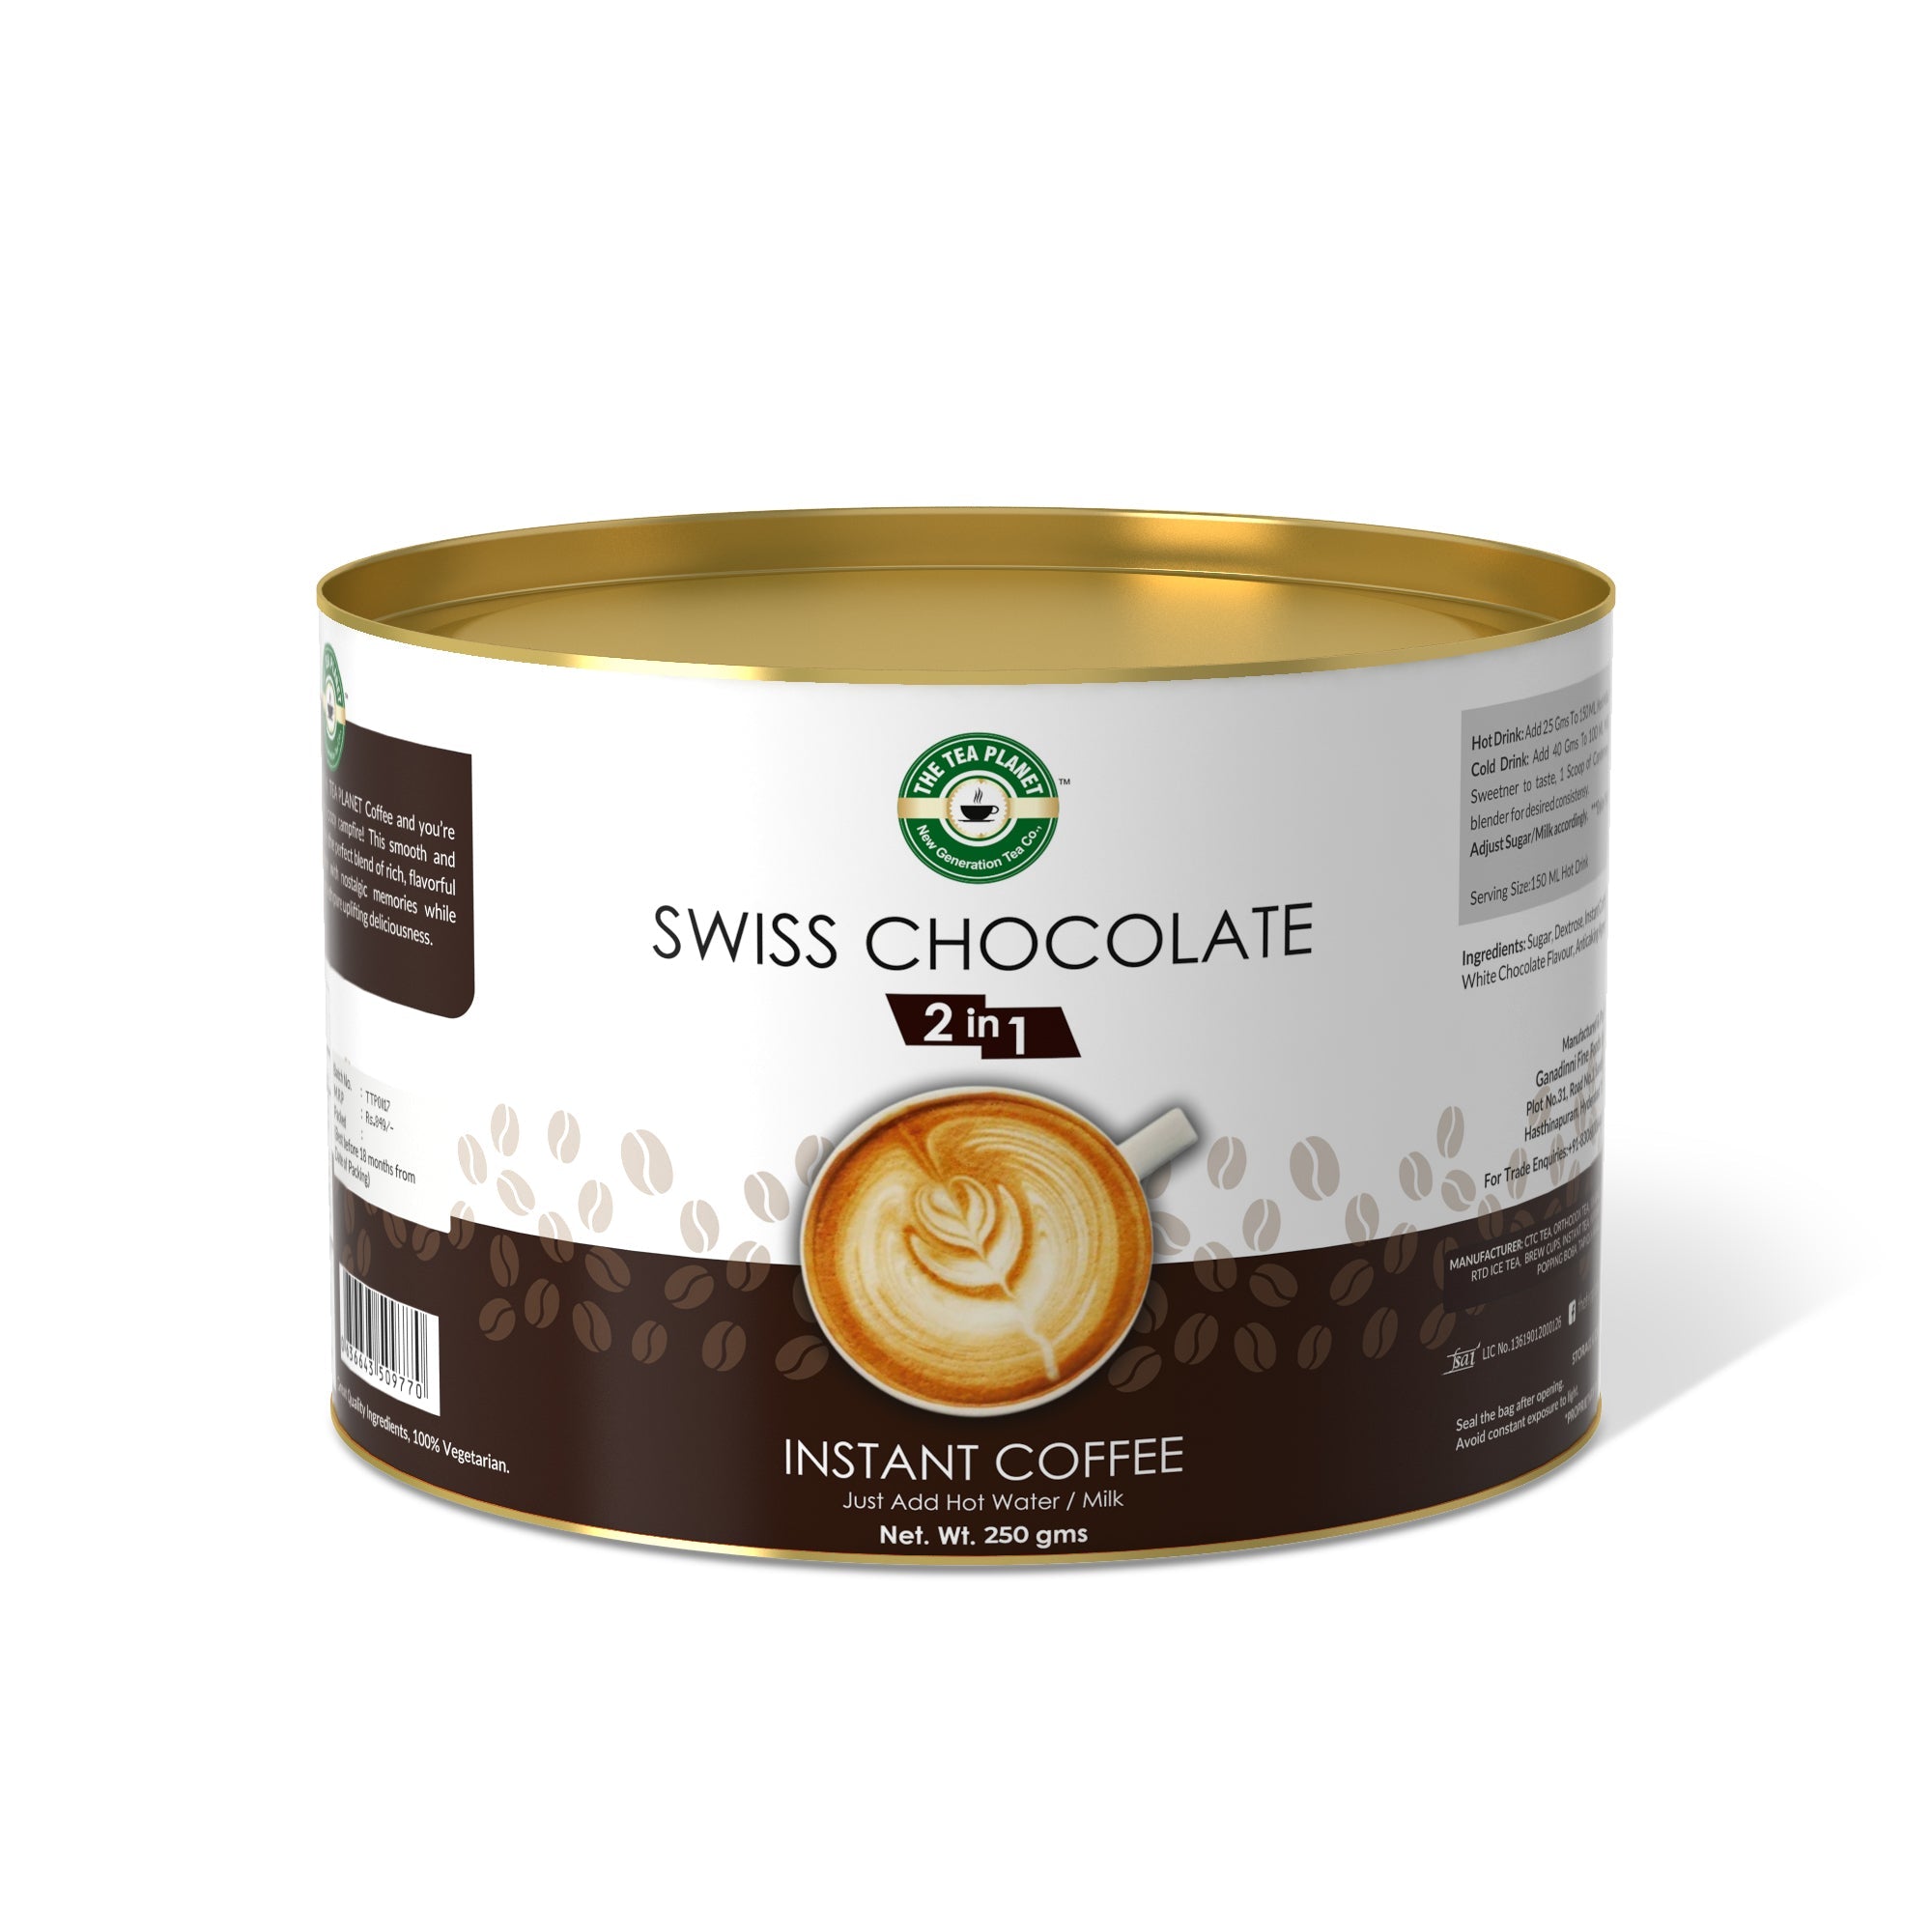 Swiss Chocolate Instant Coffee Premix (2 in 1) - 250 gms